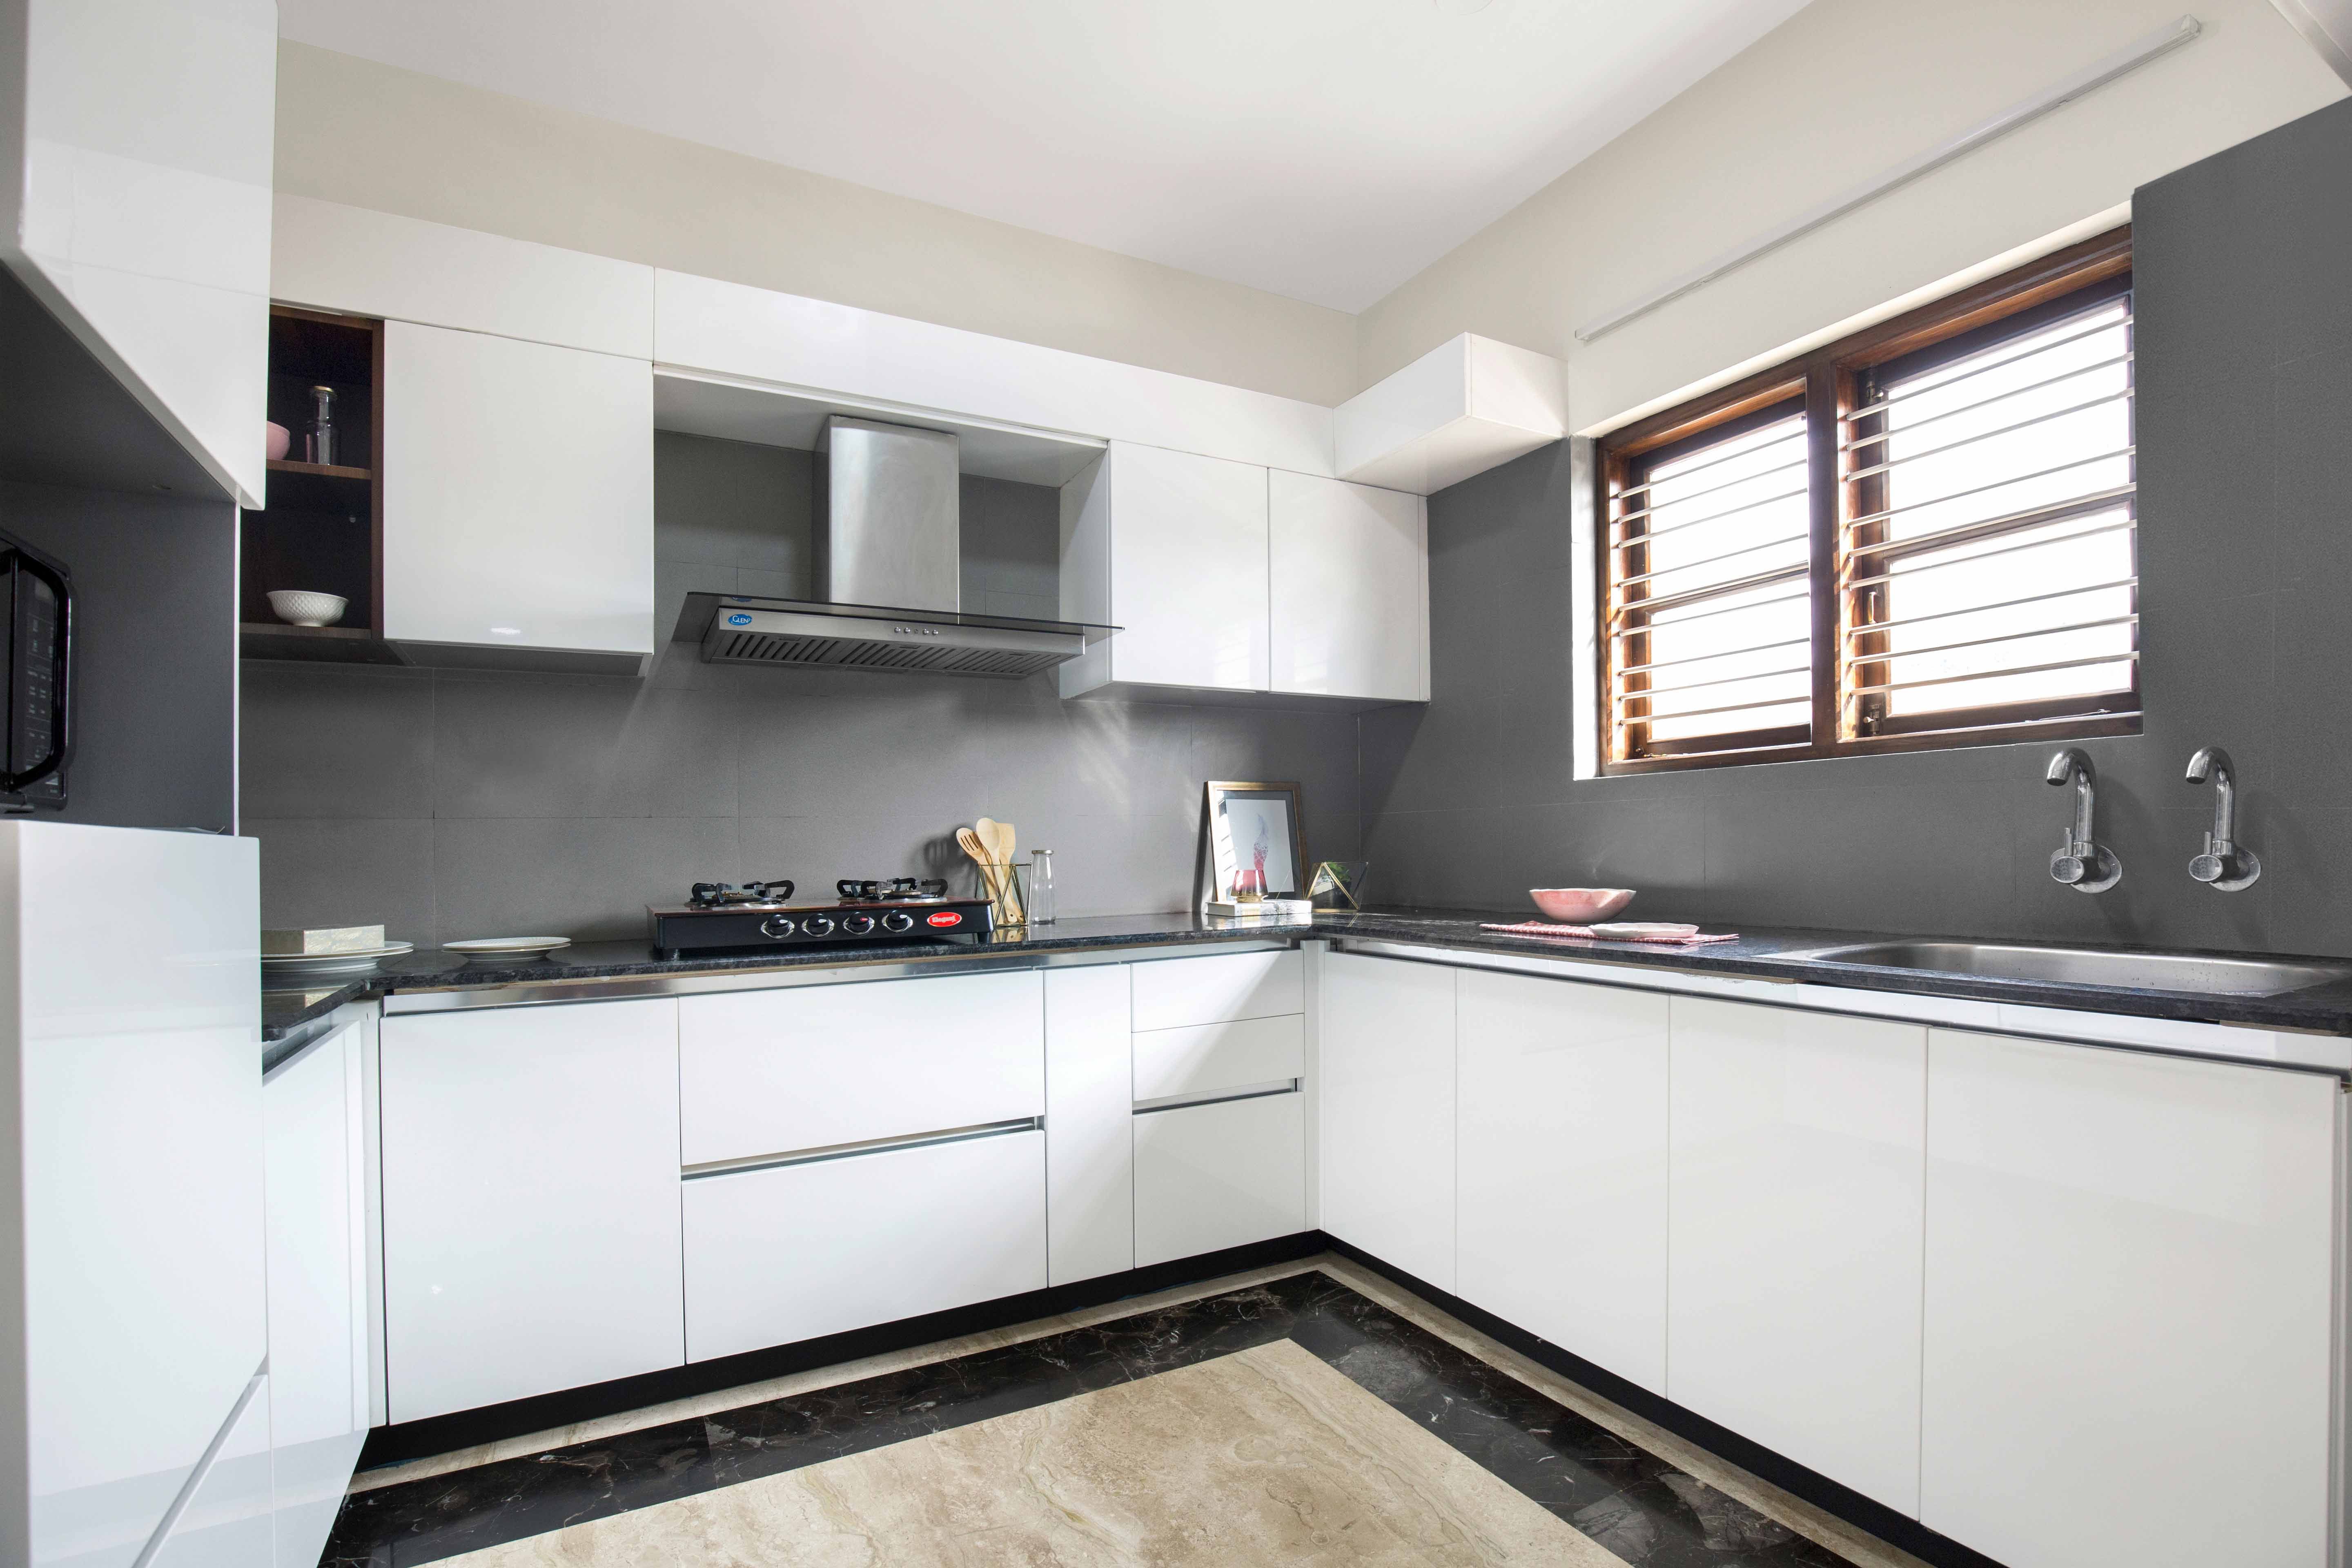 Minimal Modular U-Shaped Kitchen Cabinet Design In White With Grey Backplash